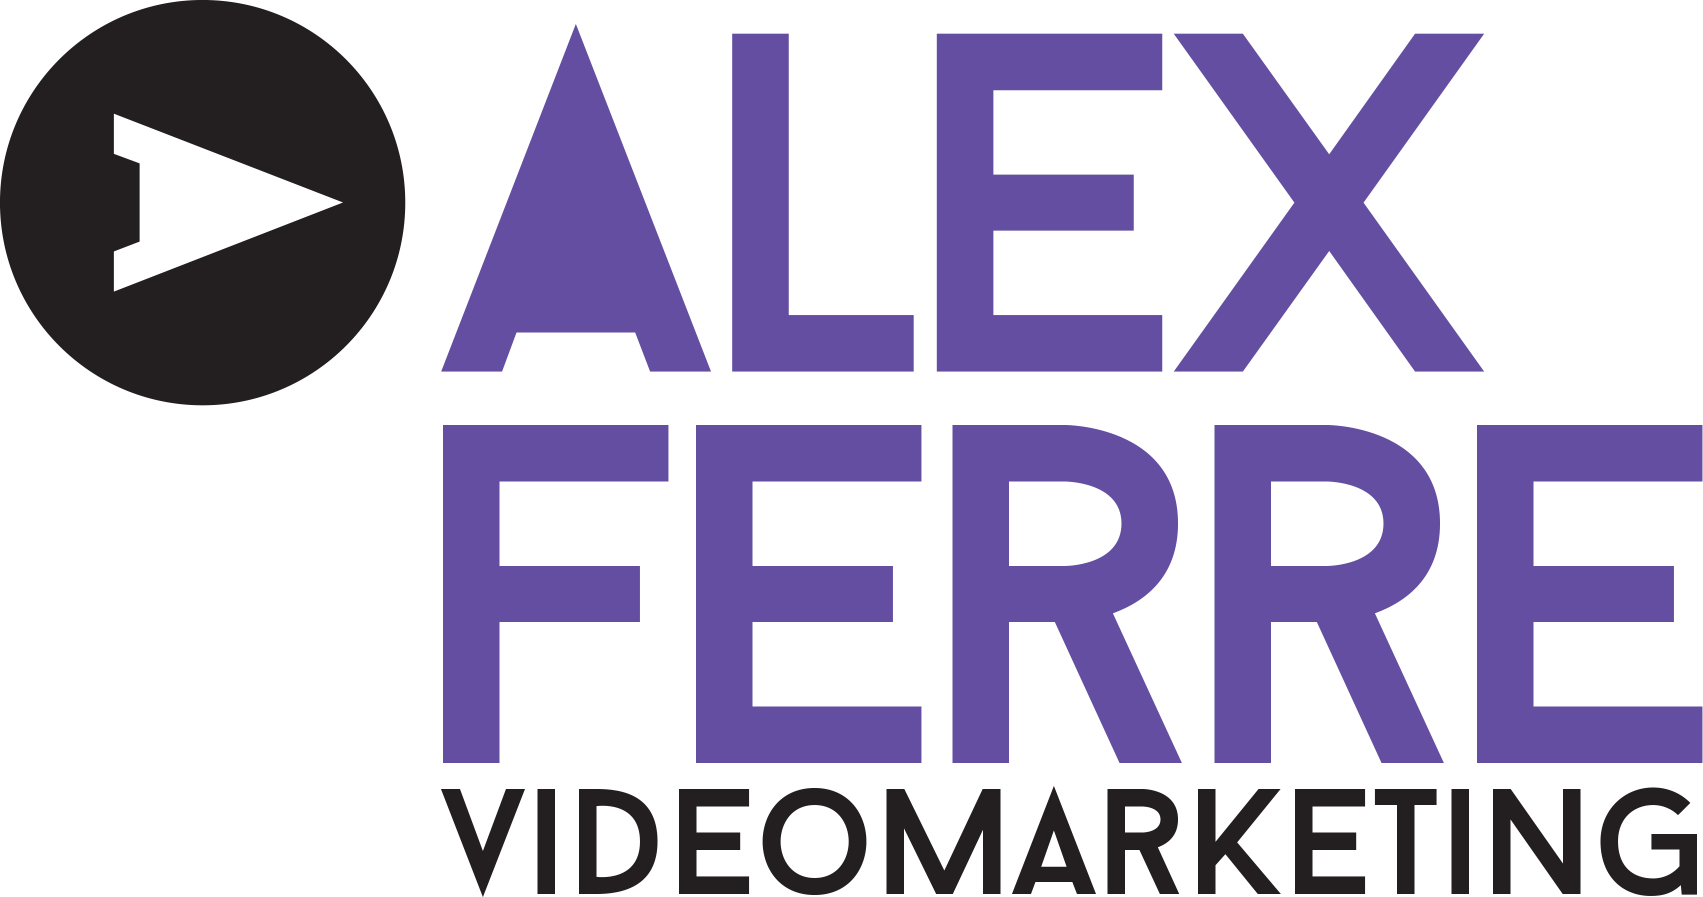 Alex Ferre Videomarketing